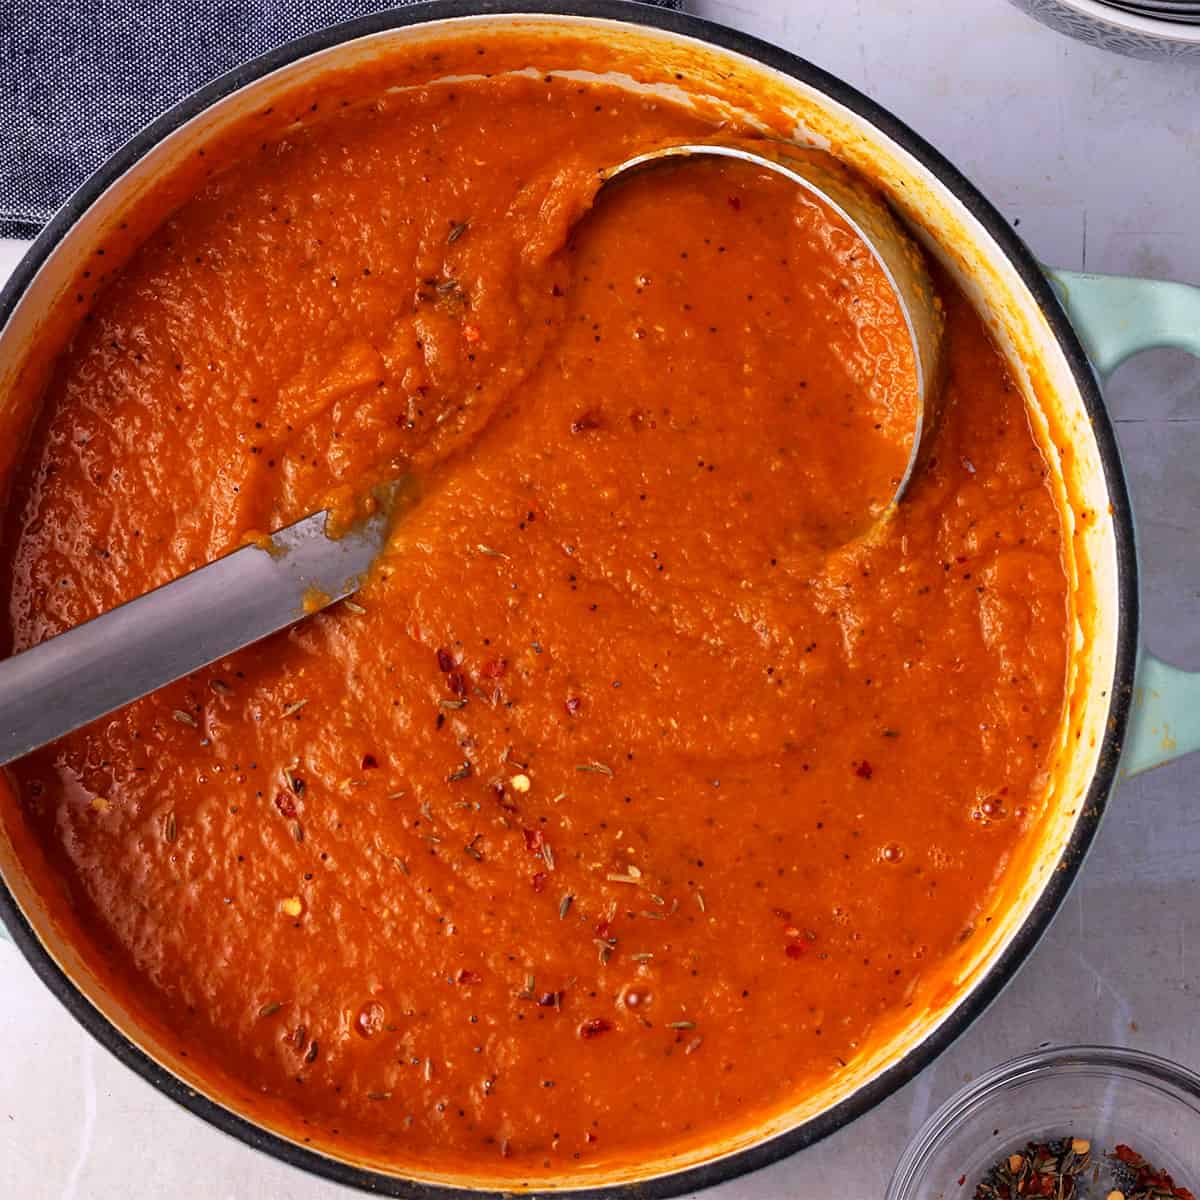 Blended carrot lentil soup in pot with ladle.